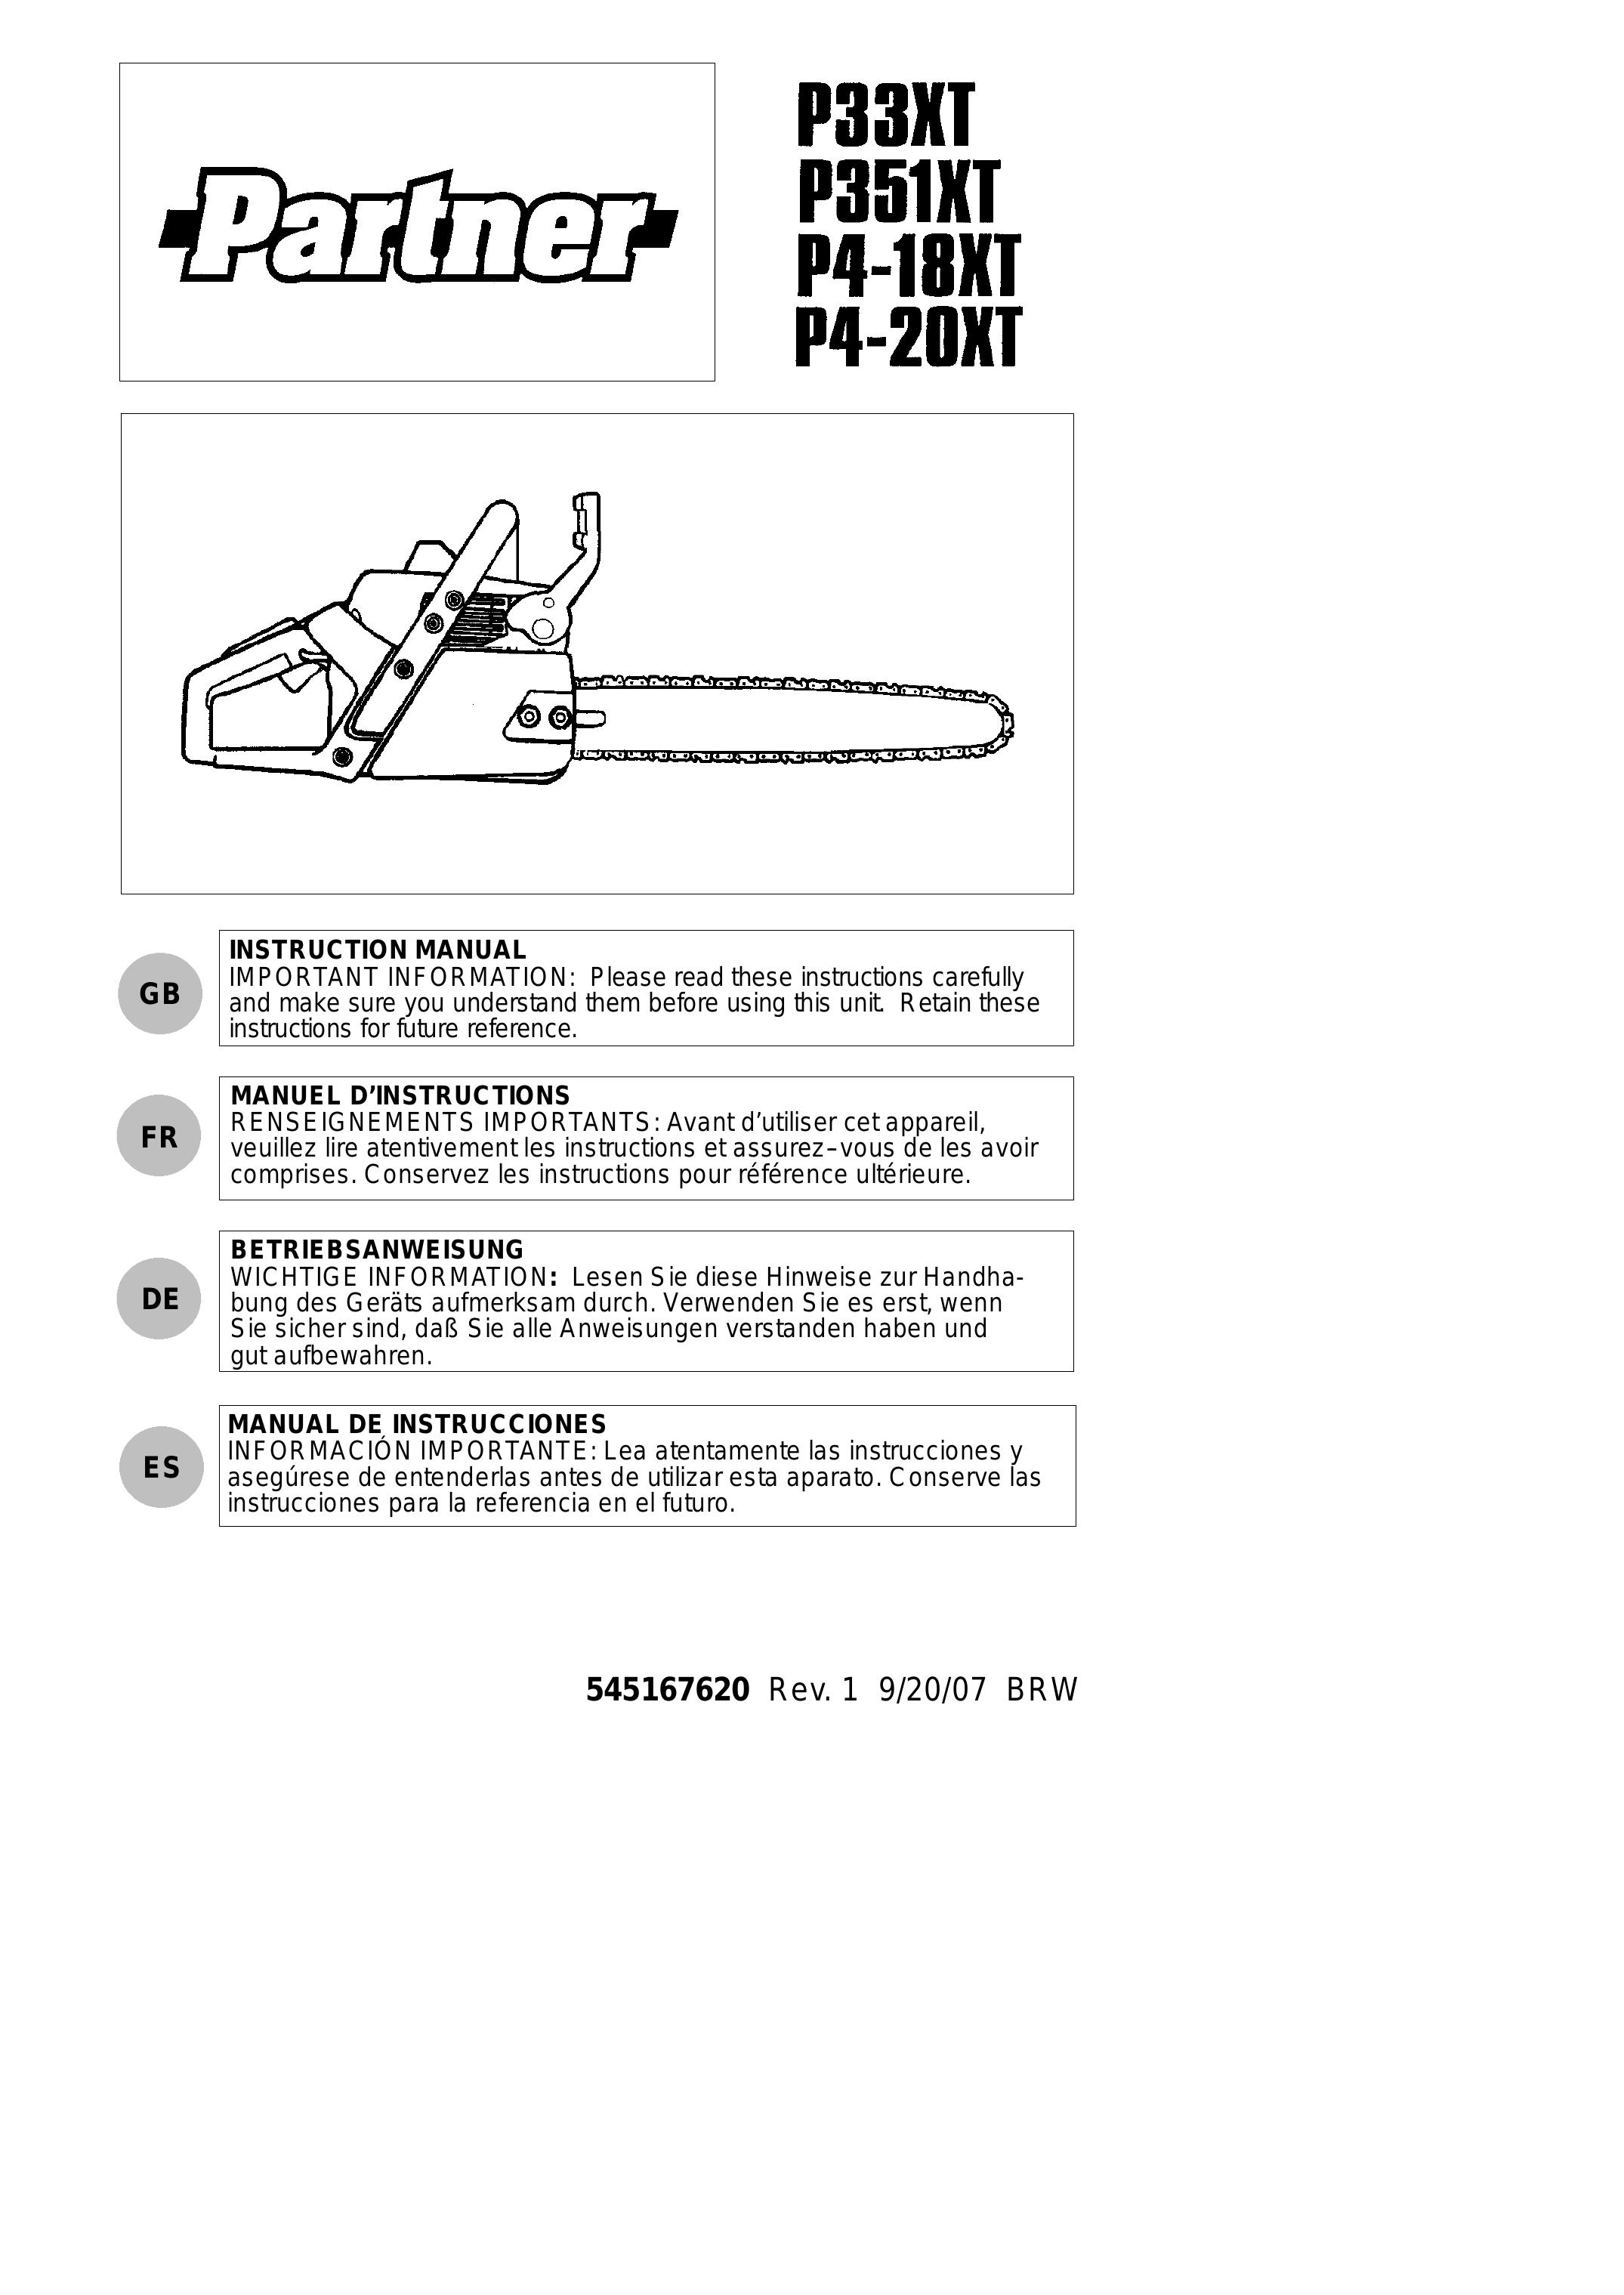 Partner Tech P351XT Chainsaw User Manual